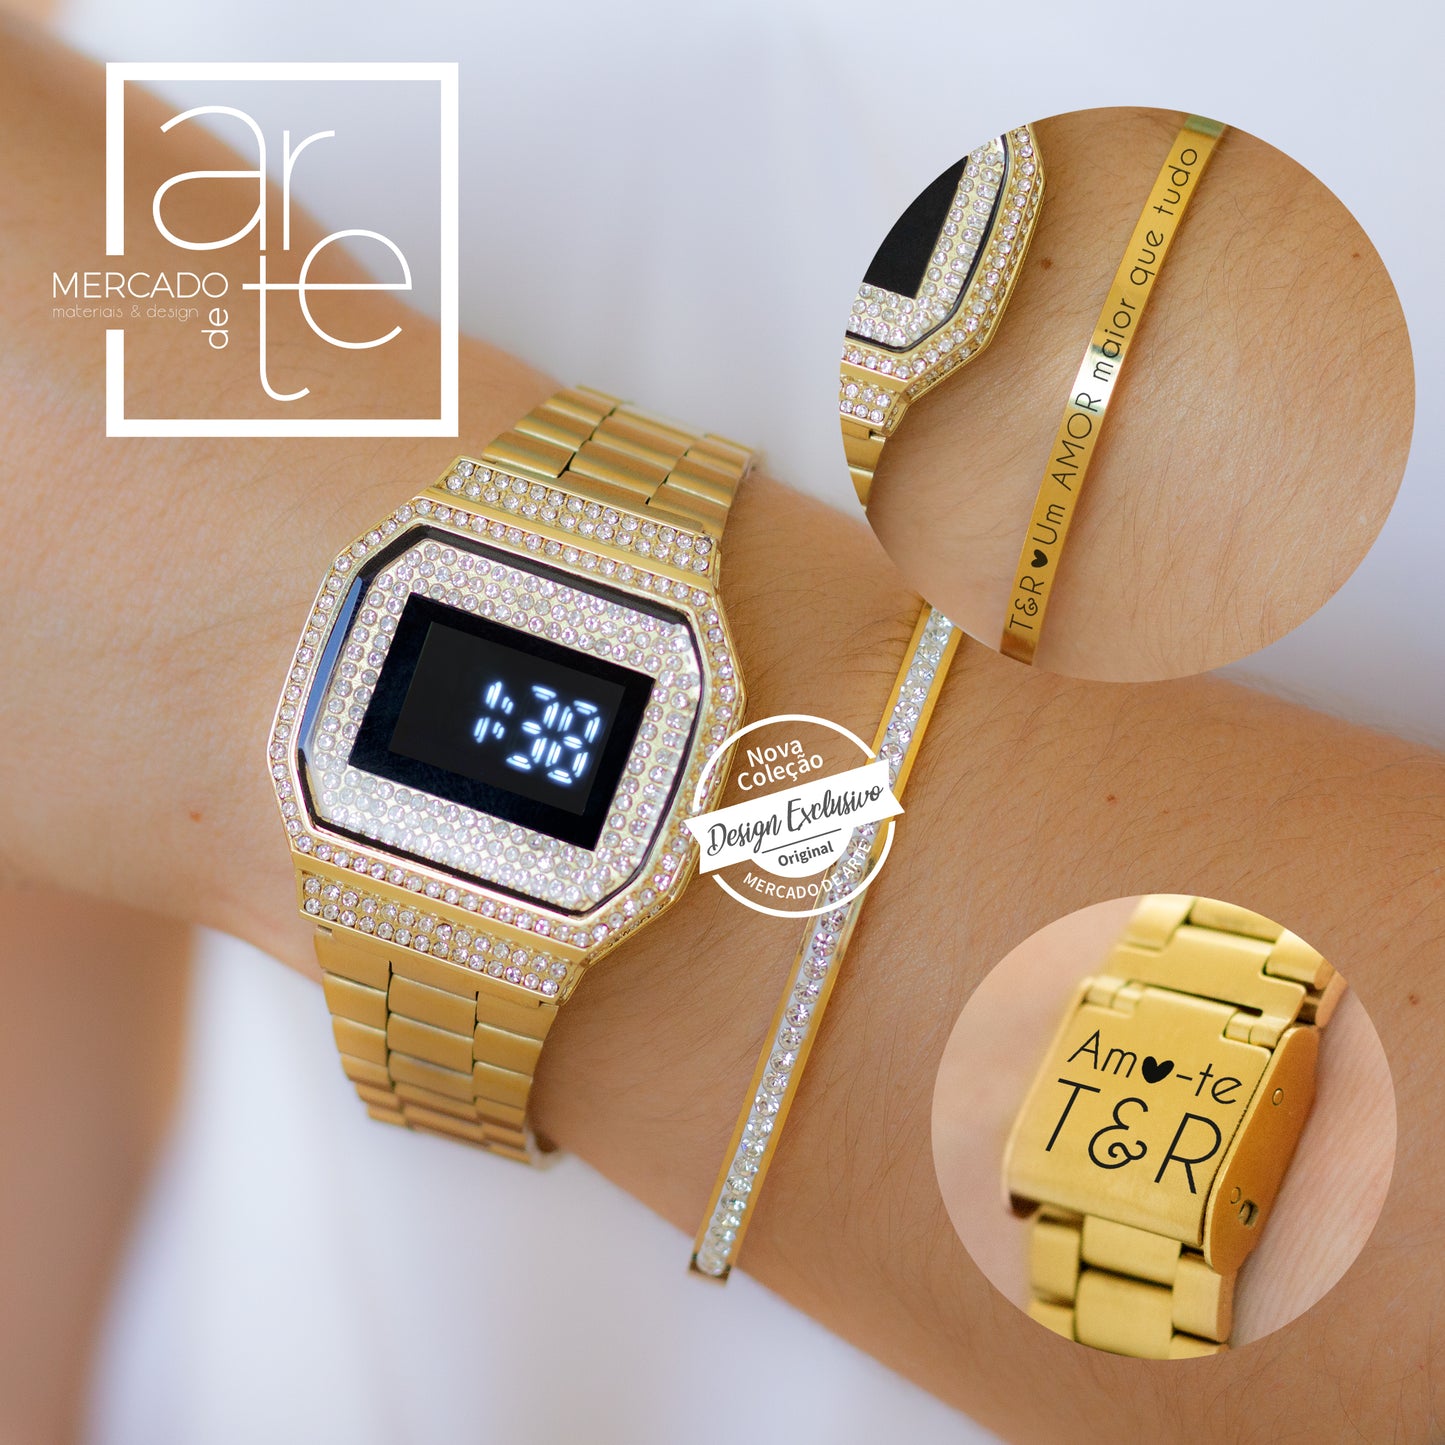 Relógio digital " Amo-te" e/ou pulseira